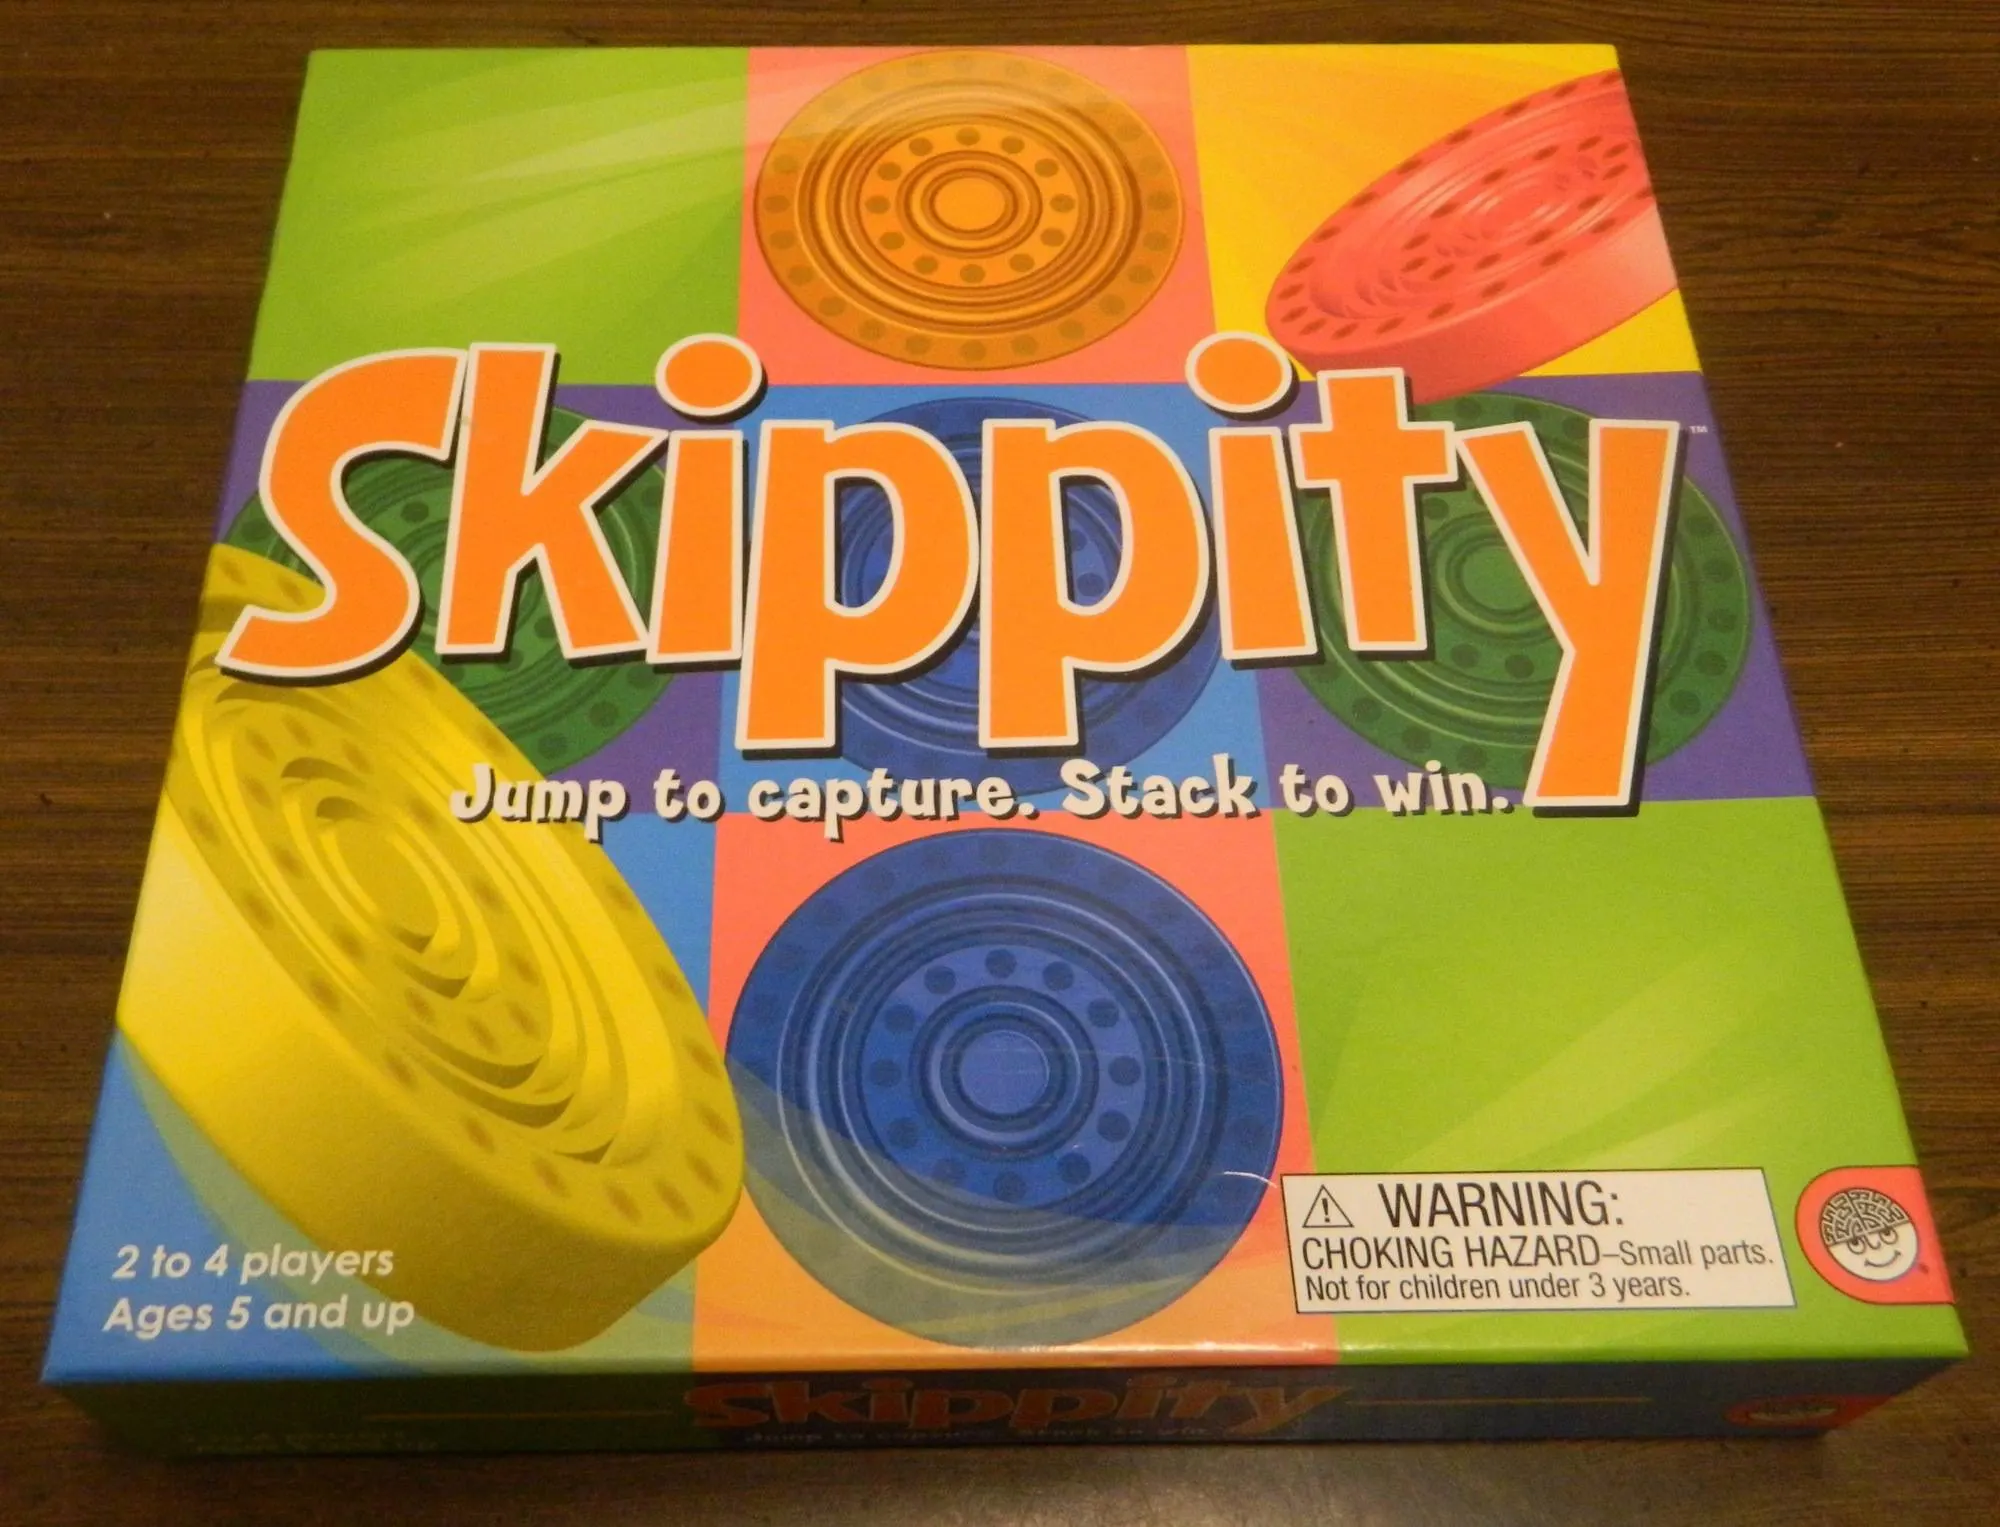 Box for Skippity